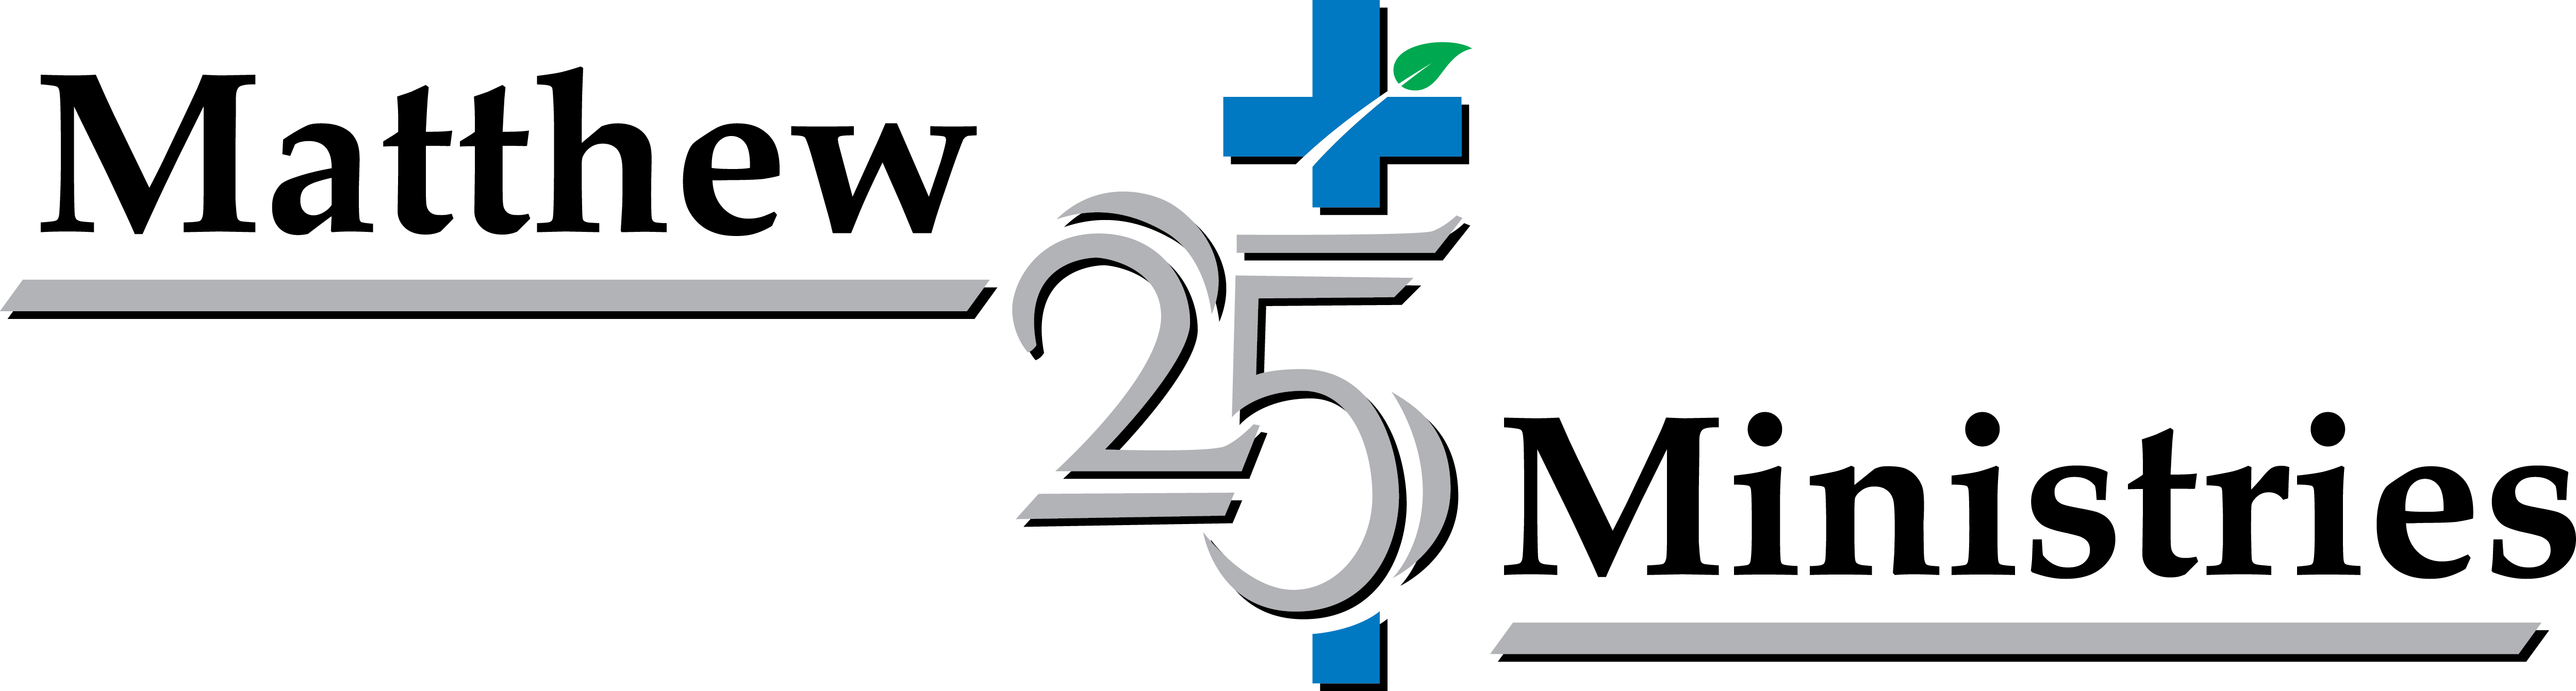 matthew 25 ministries logo.